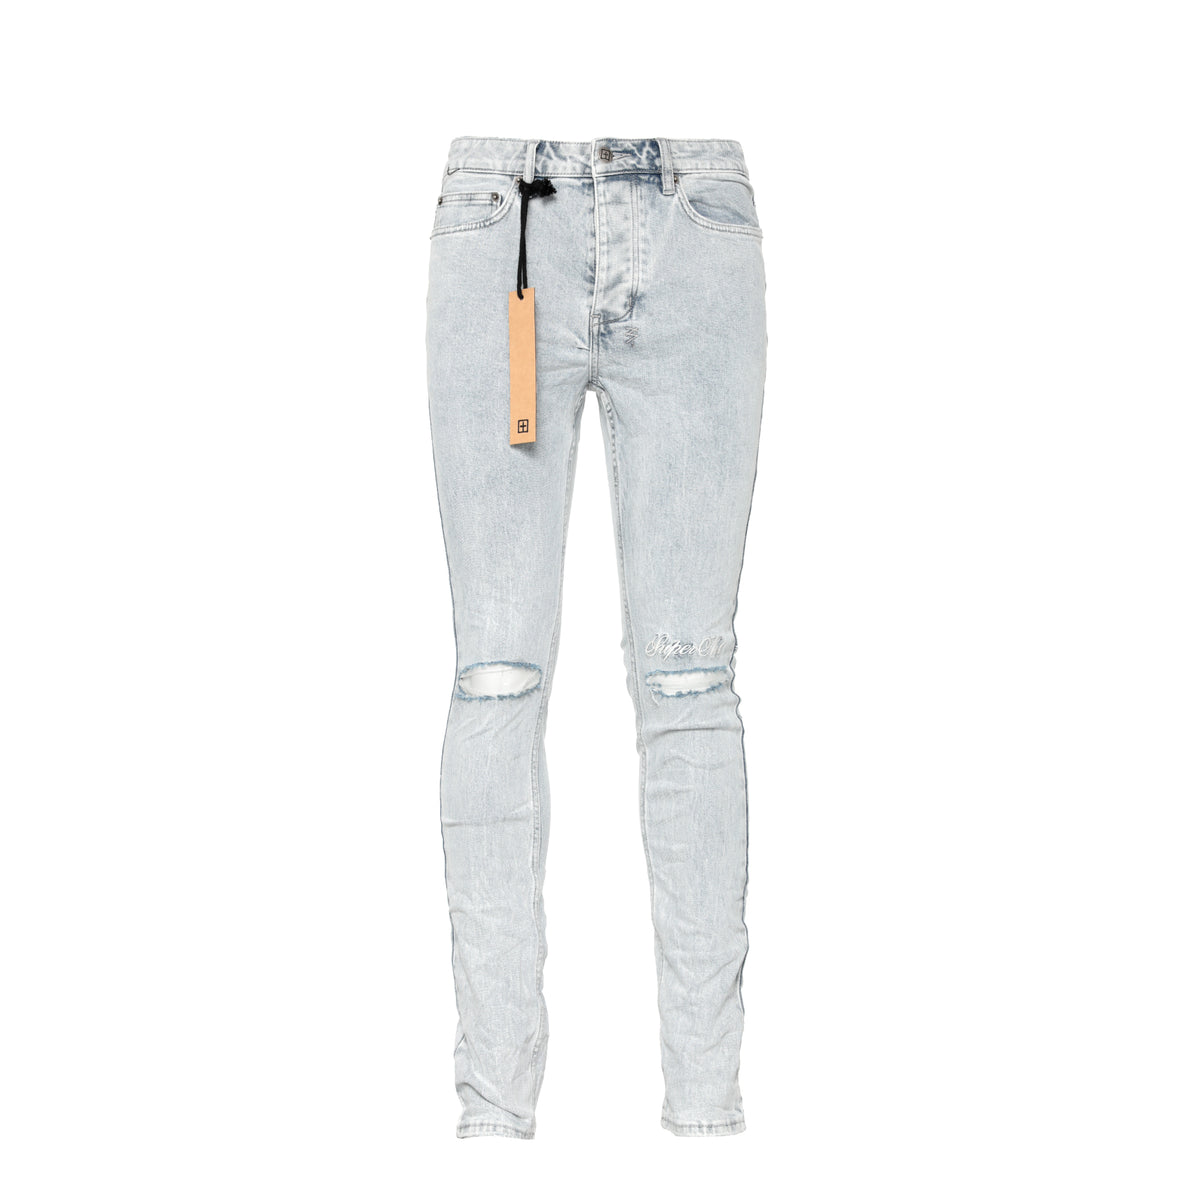 Ksubi Chitch Super Cold Men's Skinny Jeans - SIZE Boutique